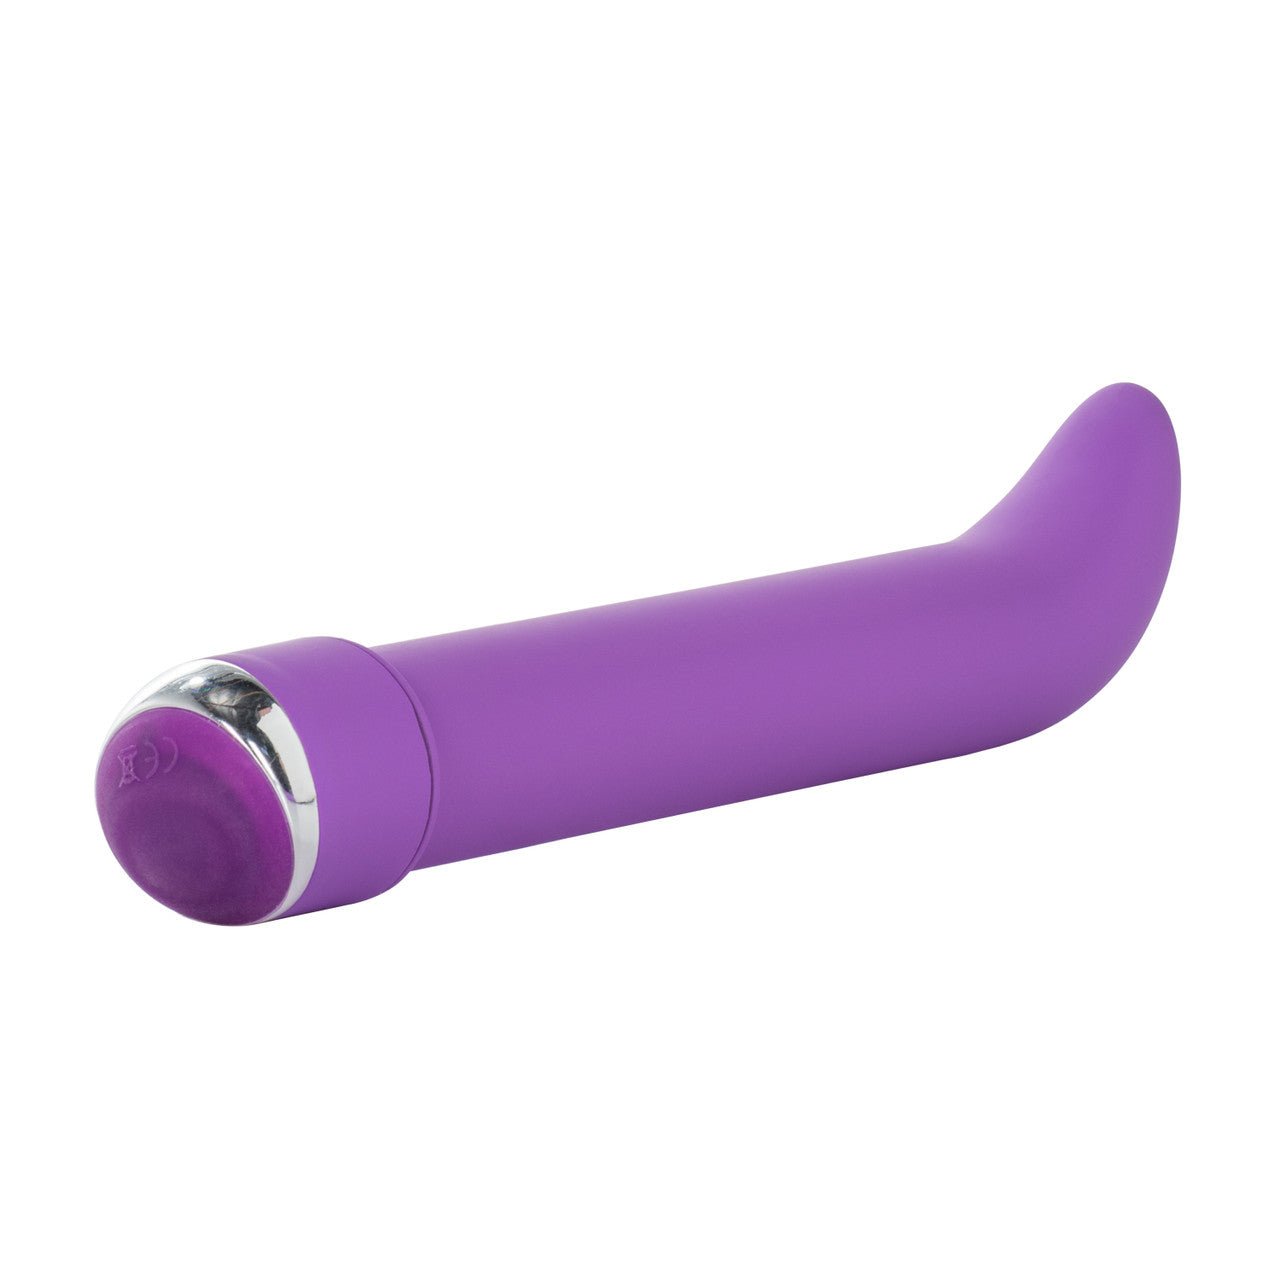 7 Function Classic Chic Standard G for G-Spot Stimulation Vibrator - Purple